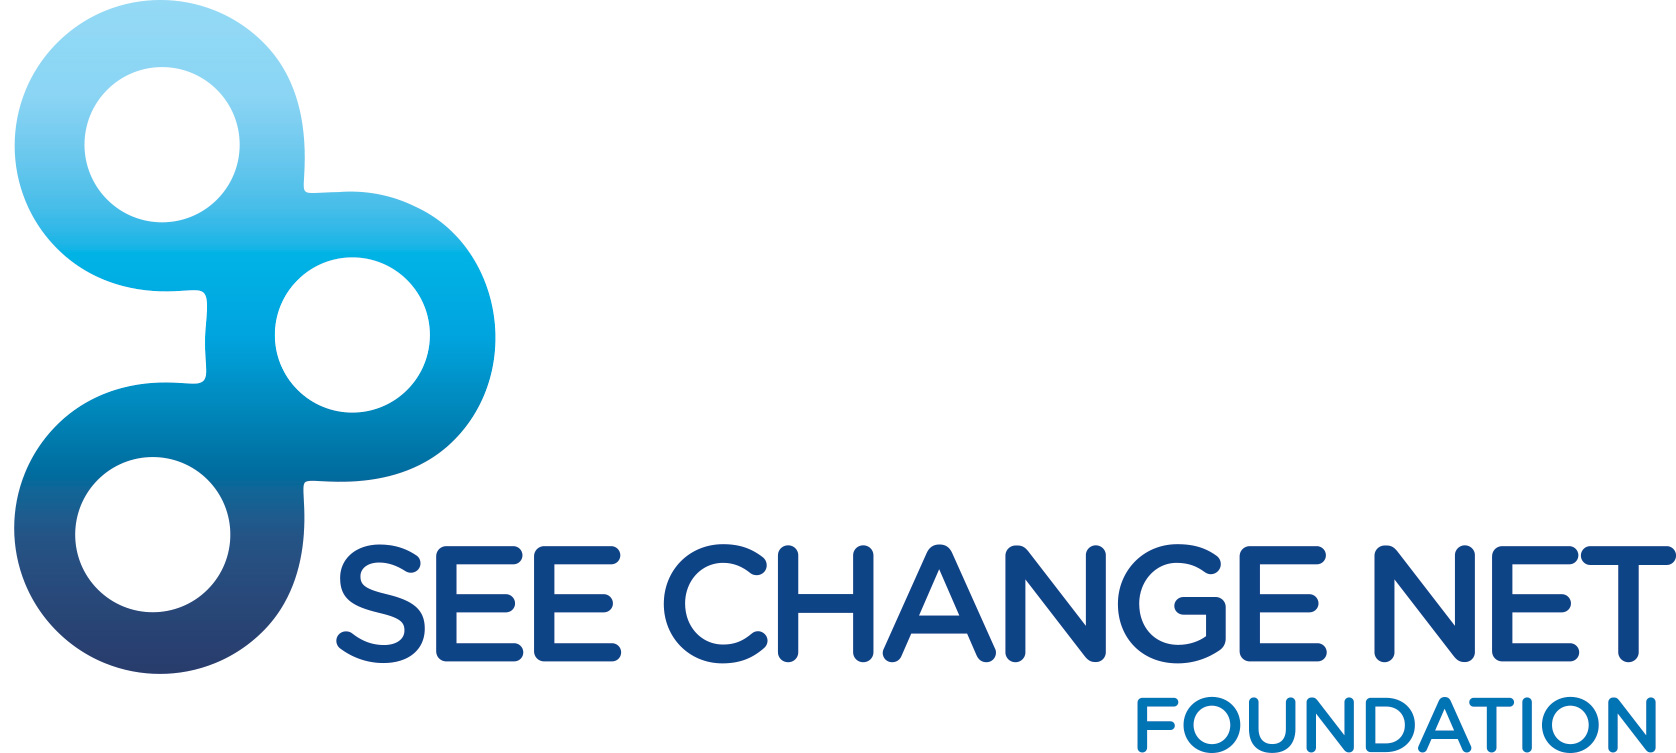 Company SEE Change Net Foundation